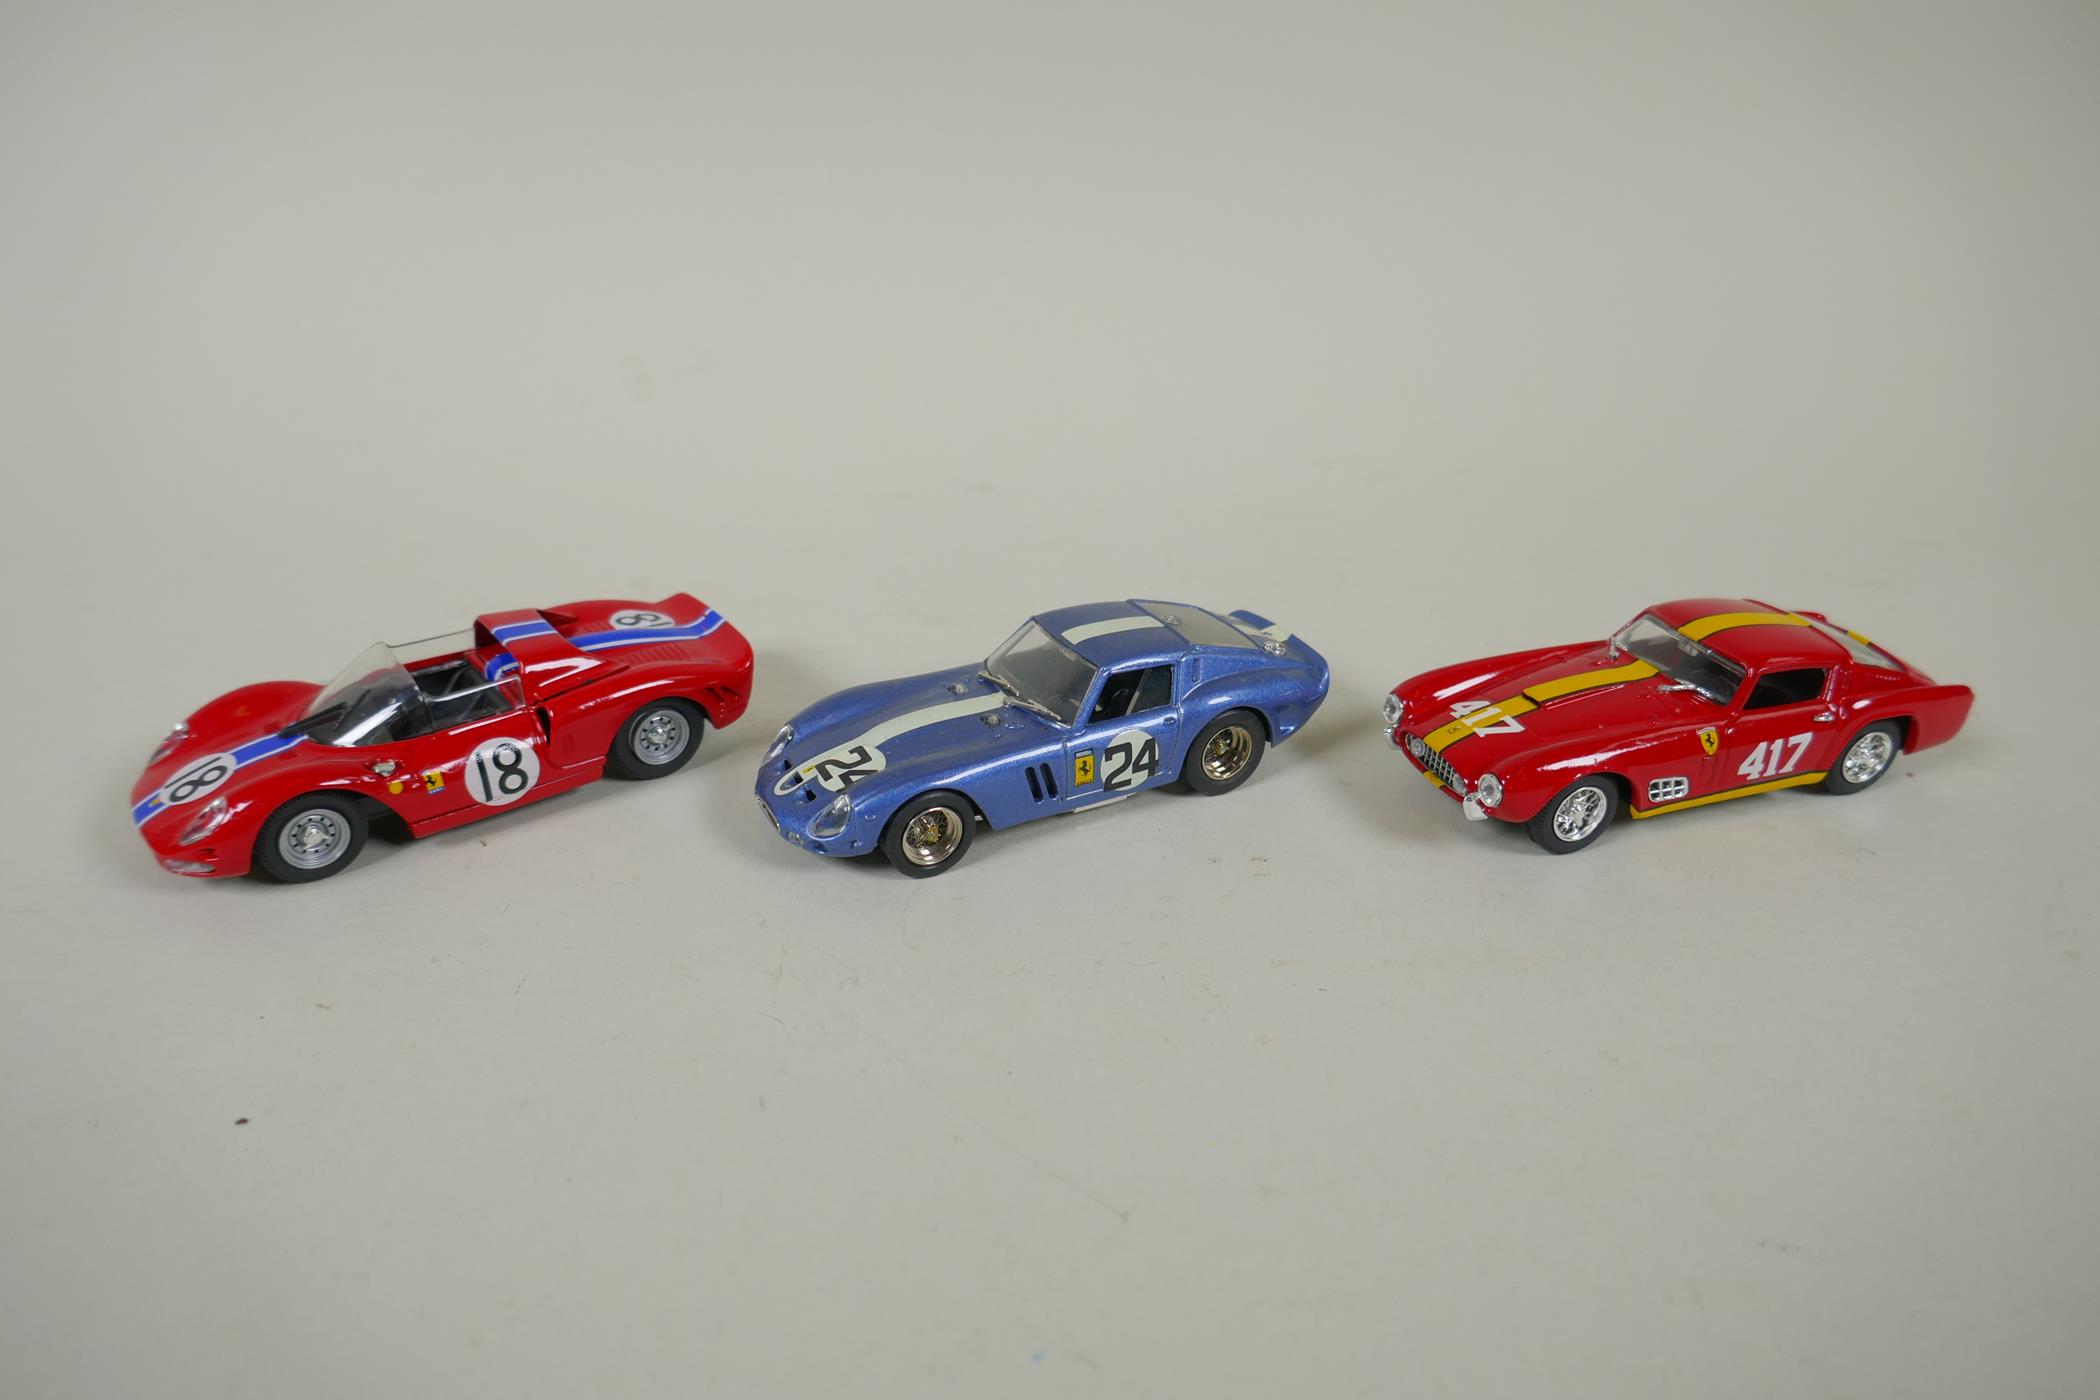 Twenty six Model Box die cast 1:43 scale model cars, to include a Ford GT40, a Ferrari 275 GTB, a - Image 8 of 8